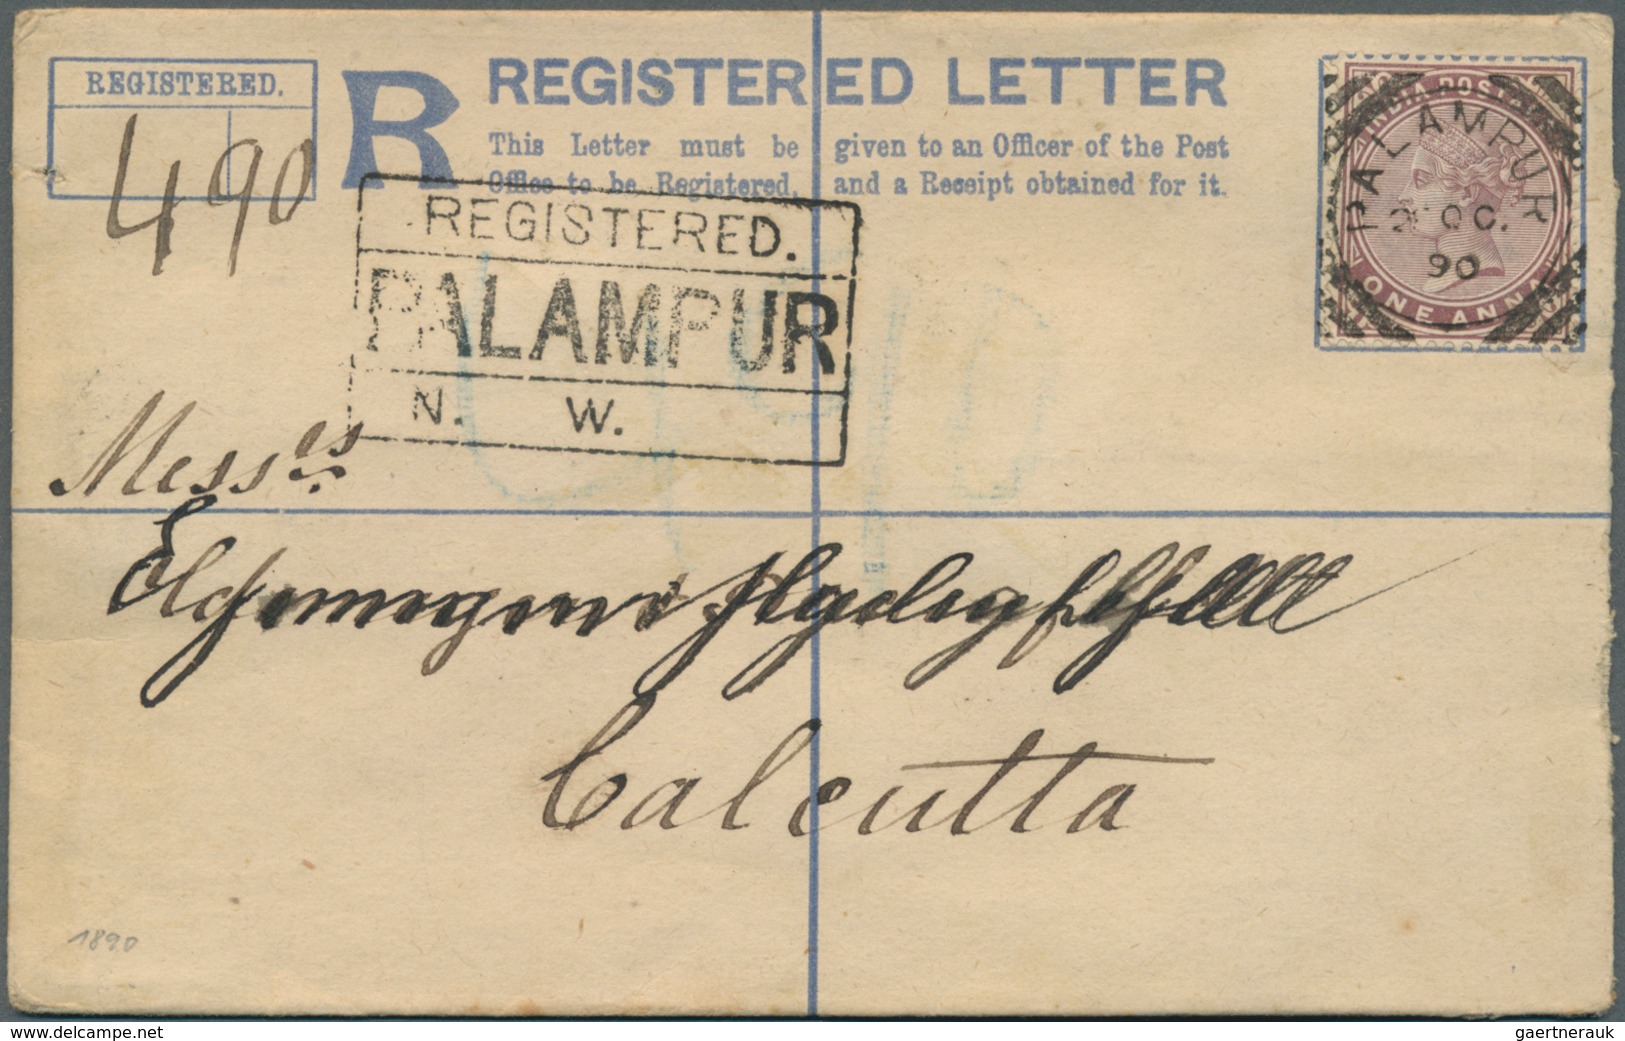 22745 Indien - Ganzsachen: 1850's-1970's ca.: Collection of Indian postal stationery envelopes, letter she